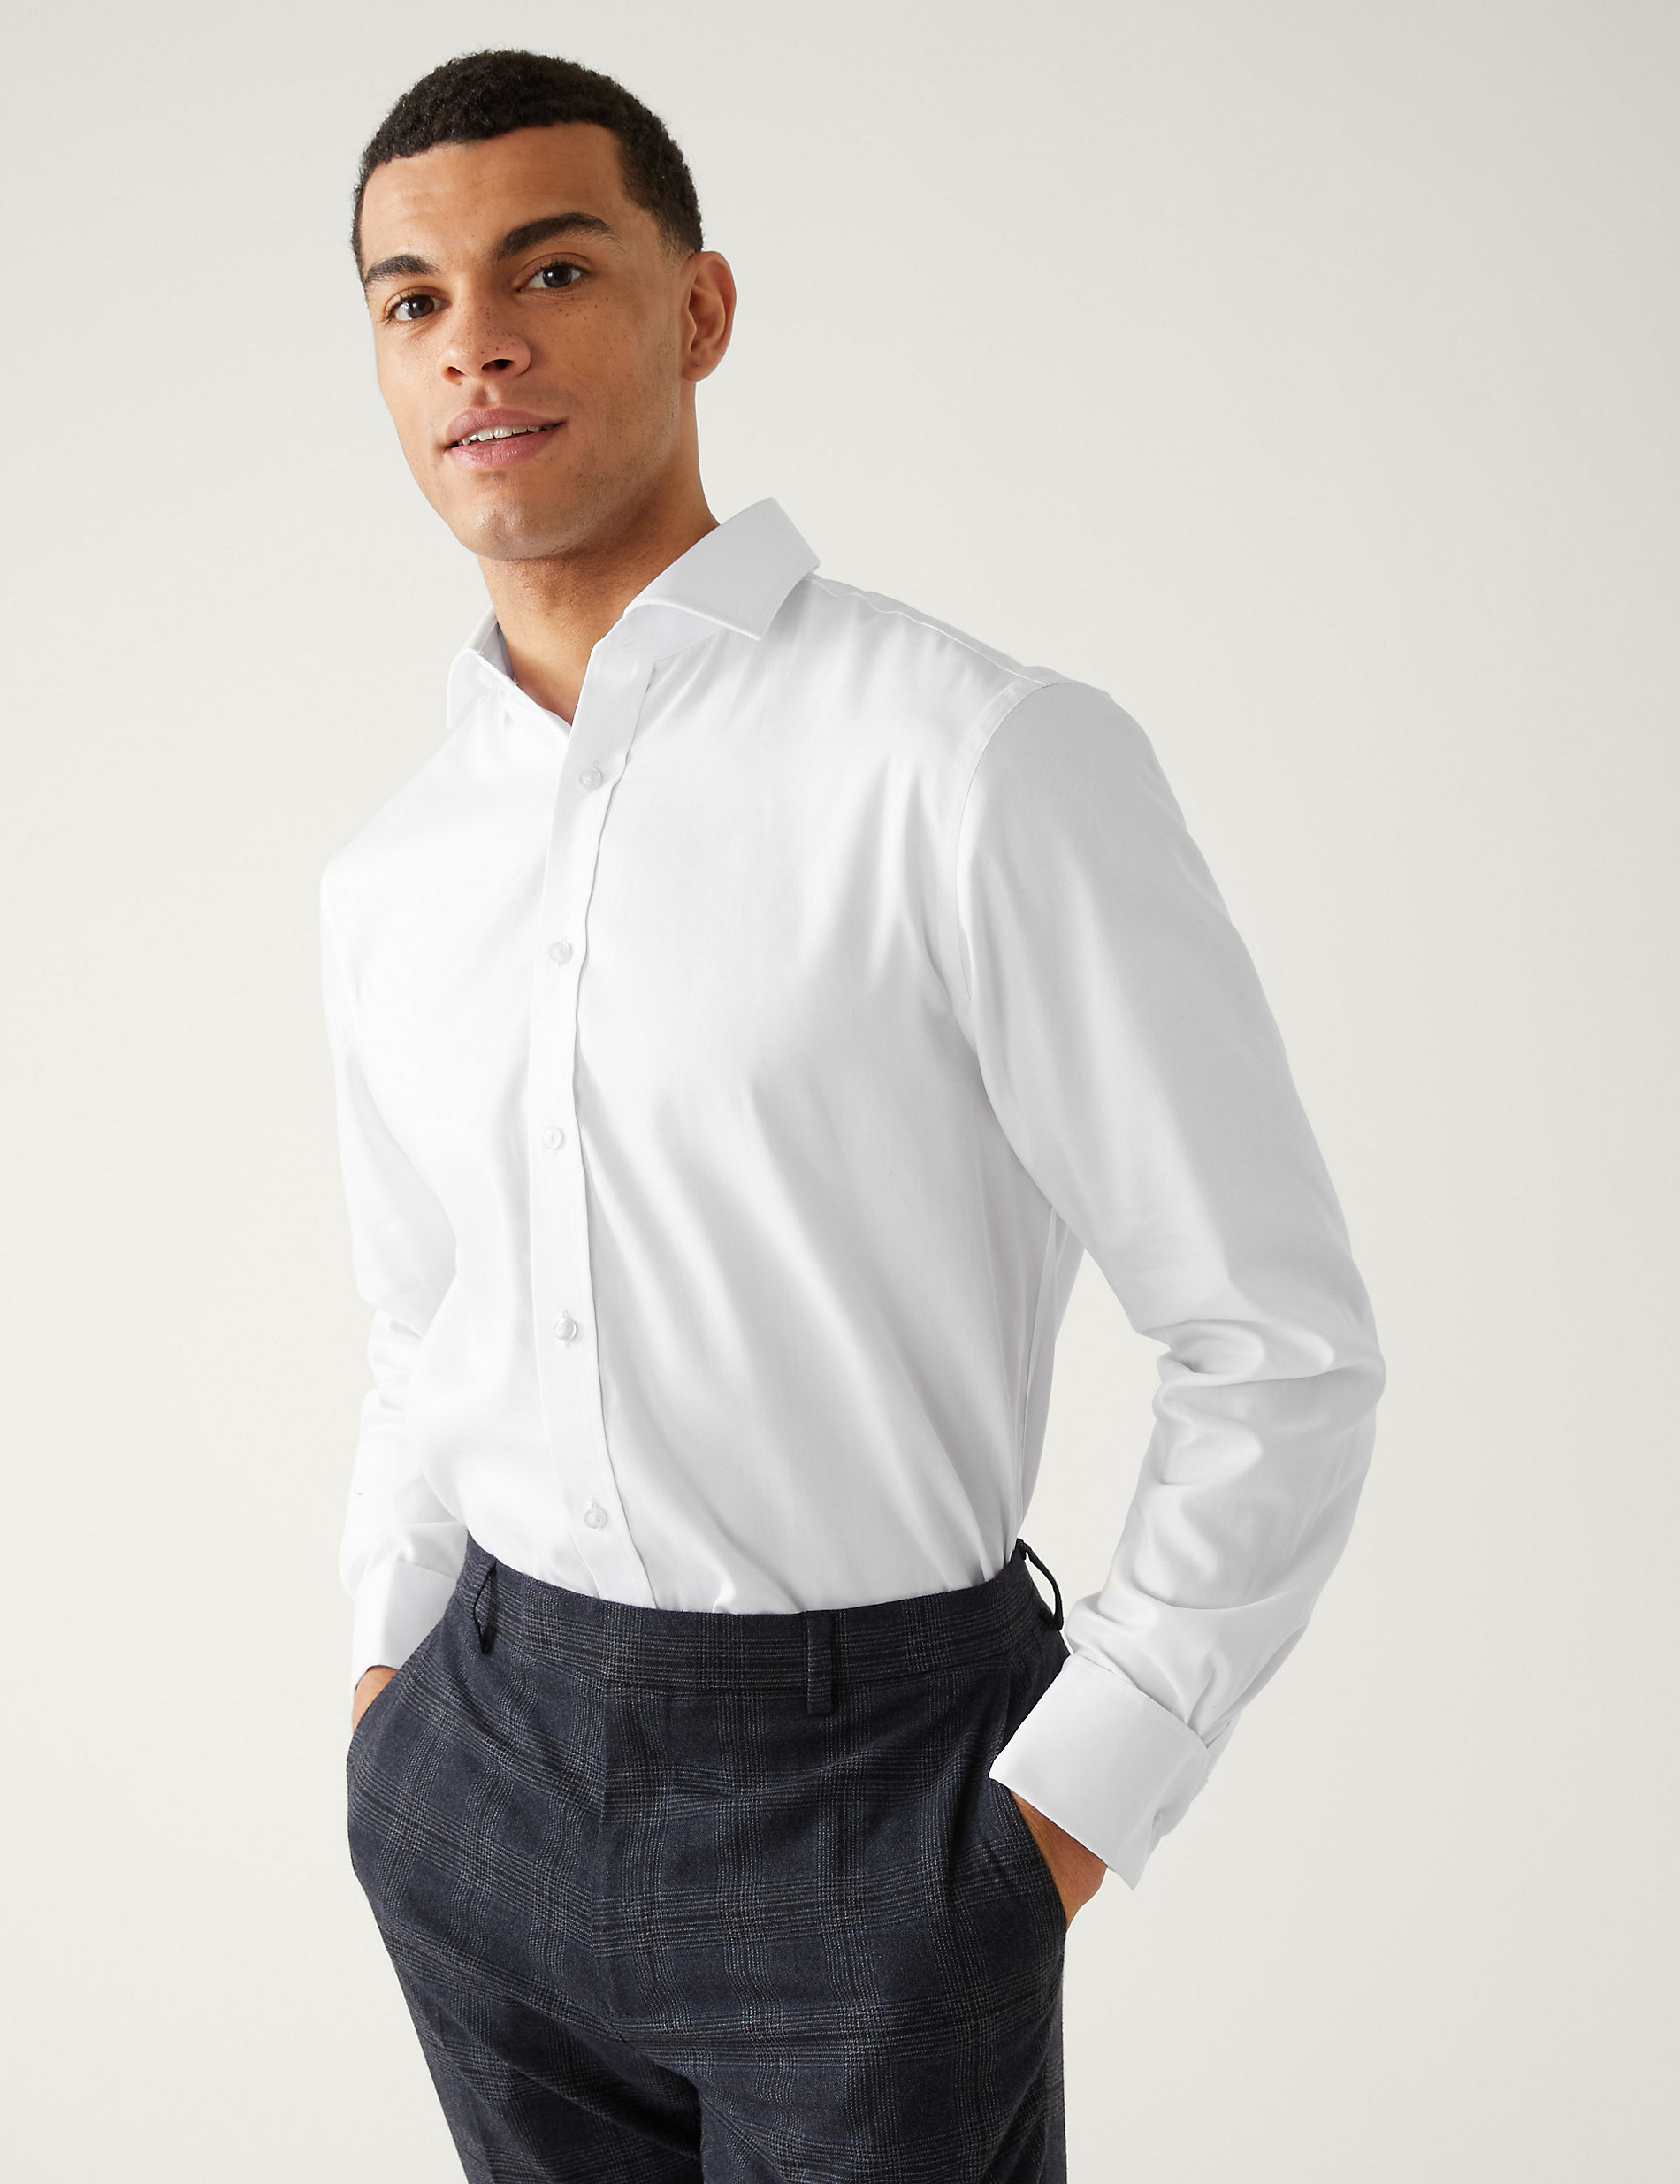 Рубашка обычного кроя из чистого хлопка без железа Marks & Spencer, белый рубашка обычного кроя из чистого хлопка без глажки marks